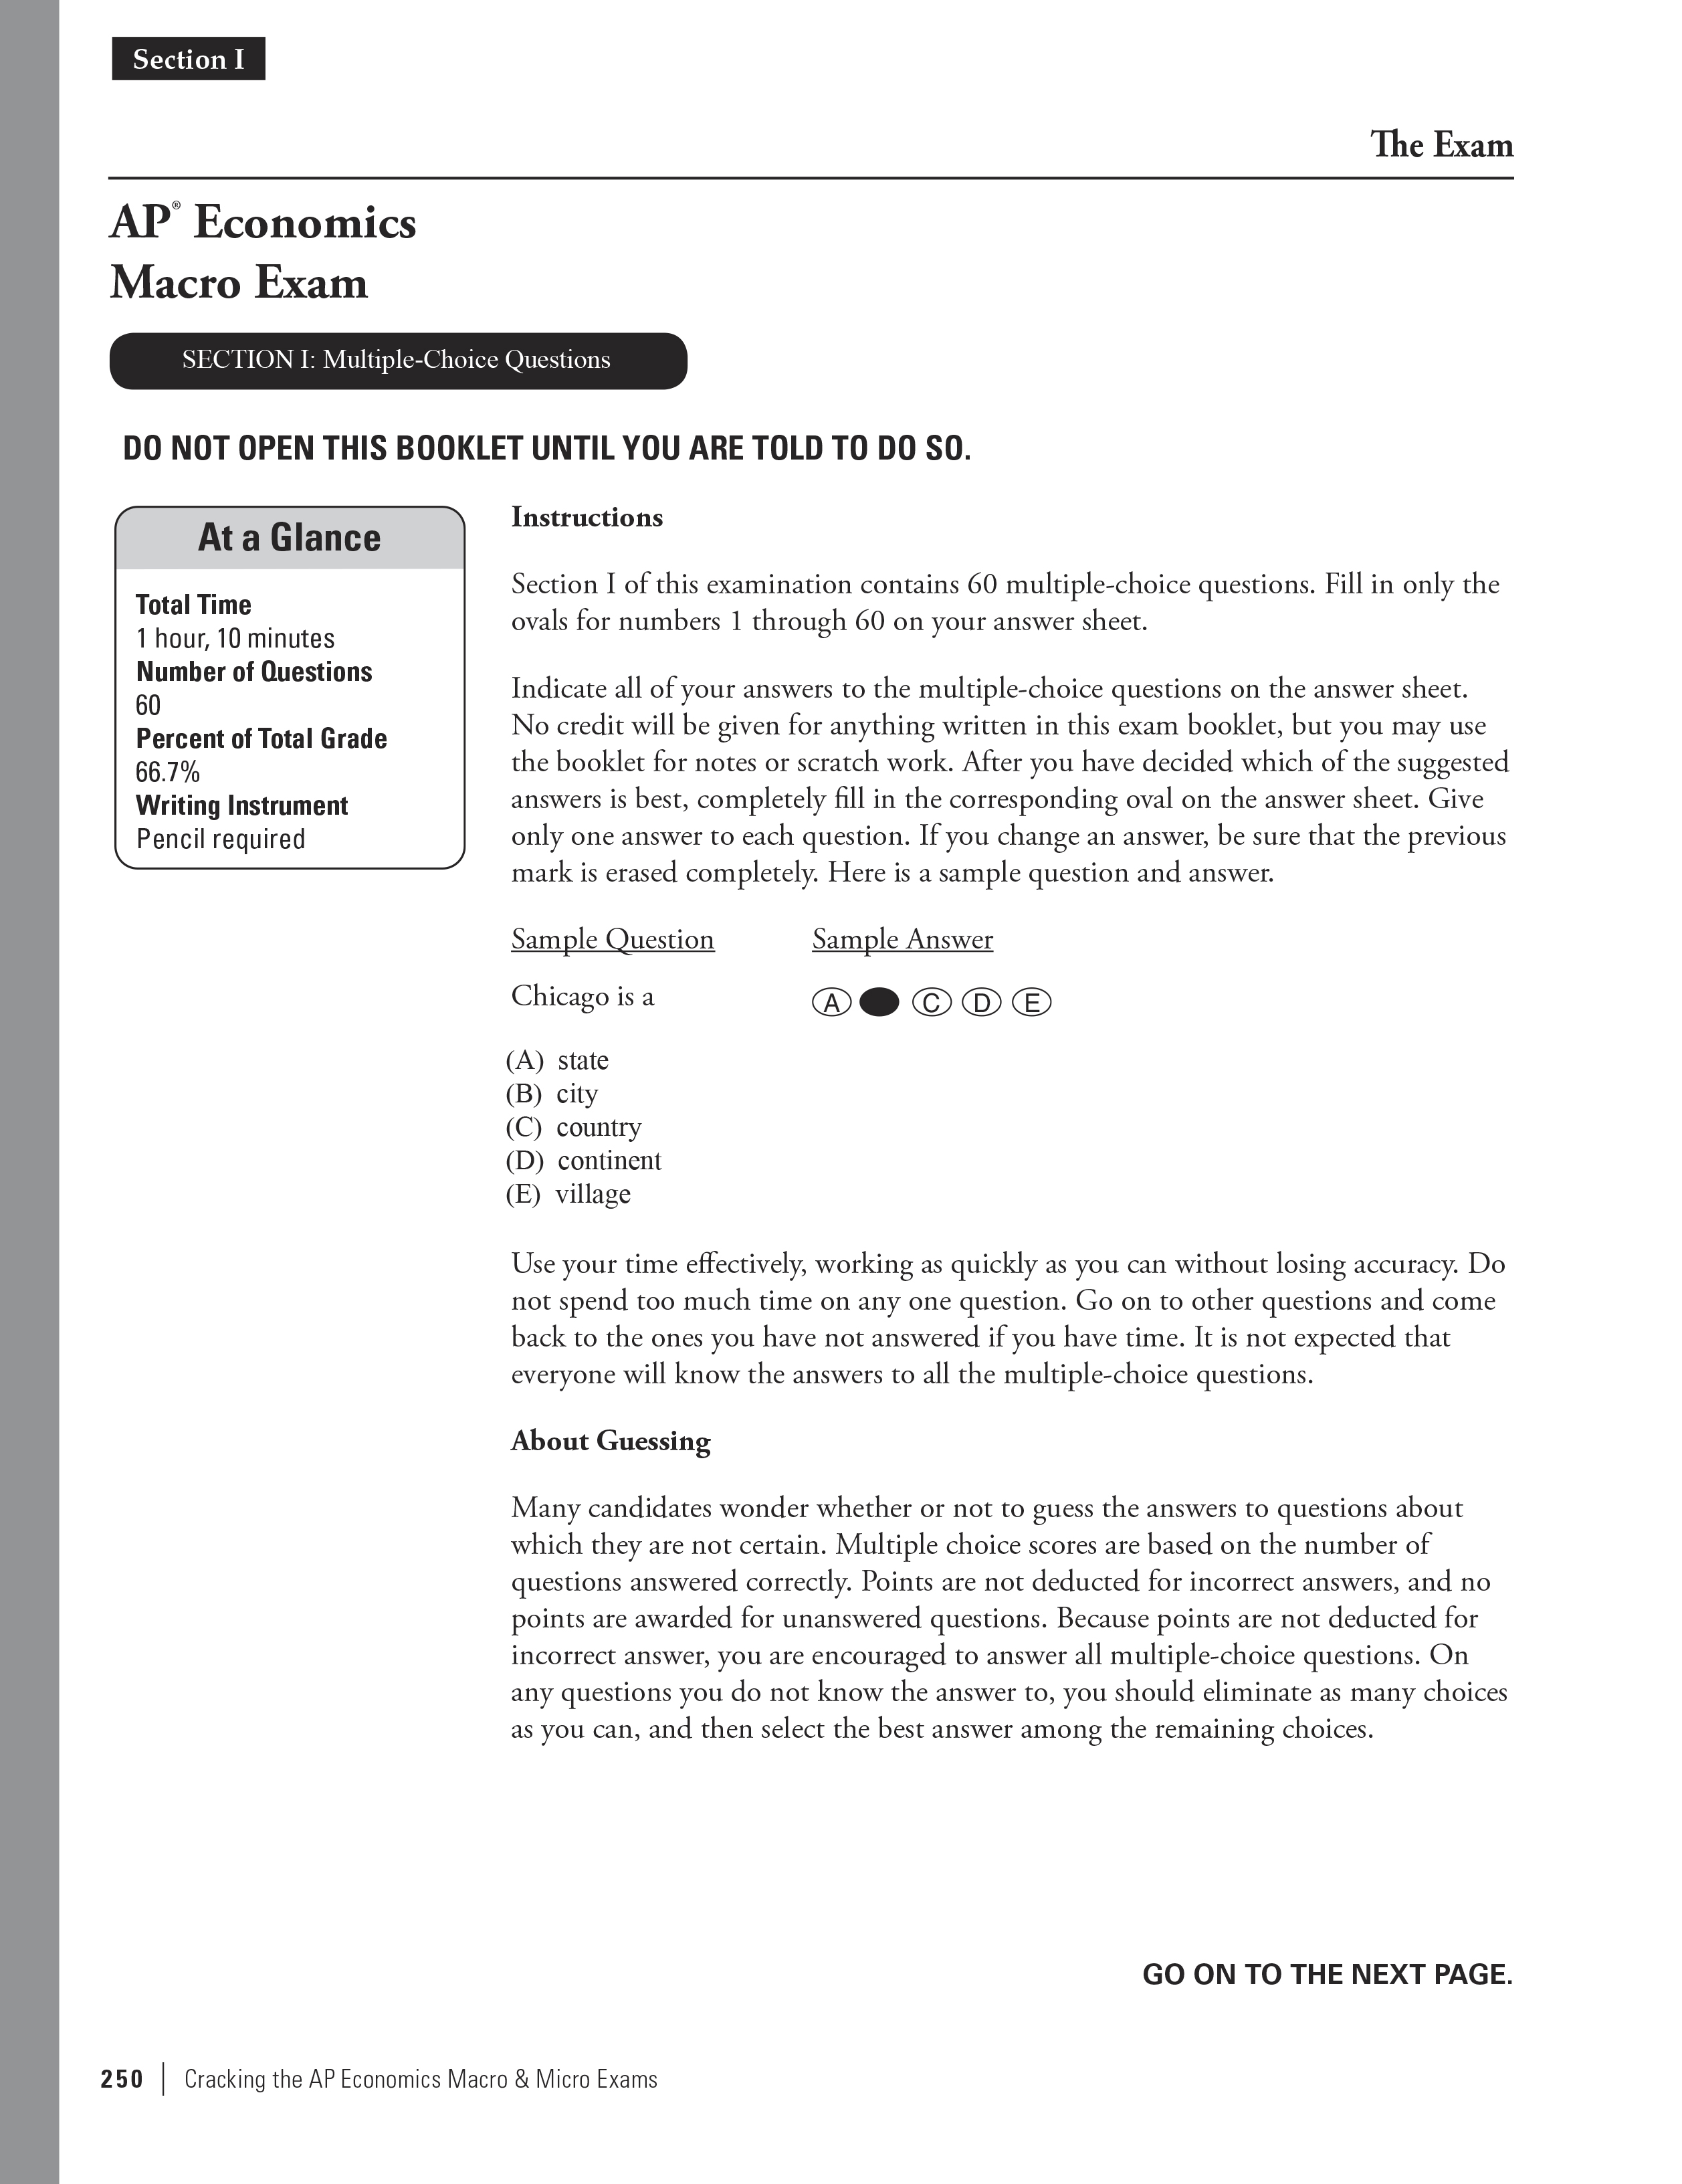 macroeconomics-test-pdf